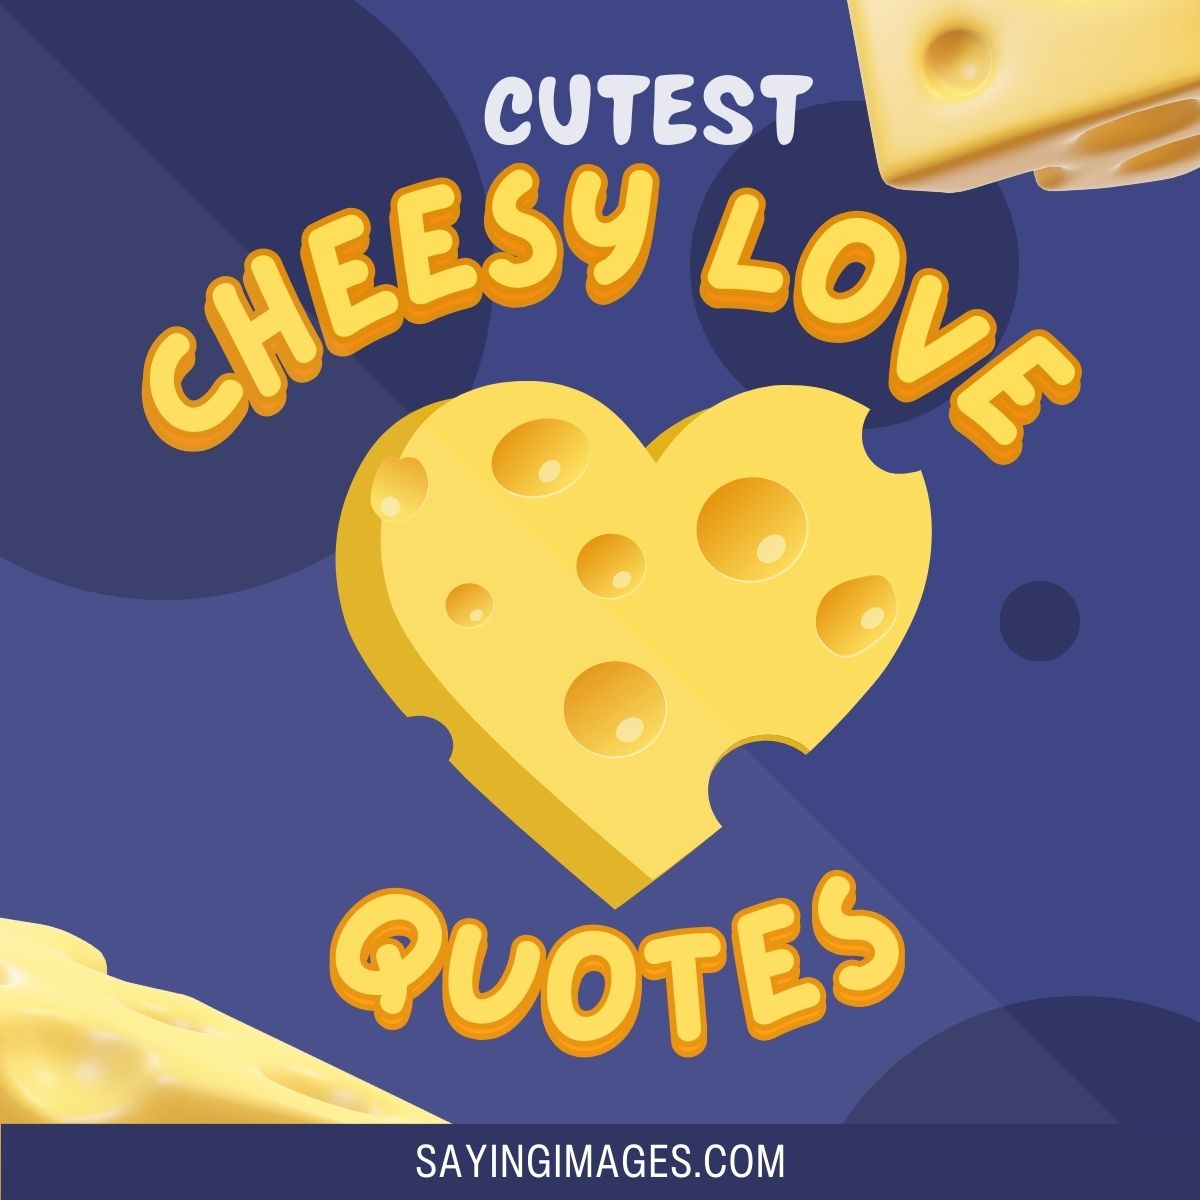 Cheesy Love Quotes